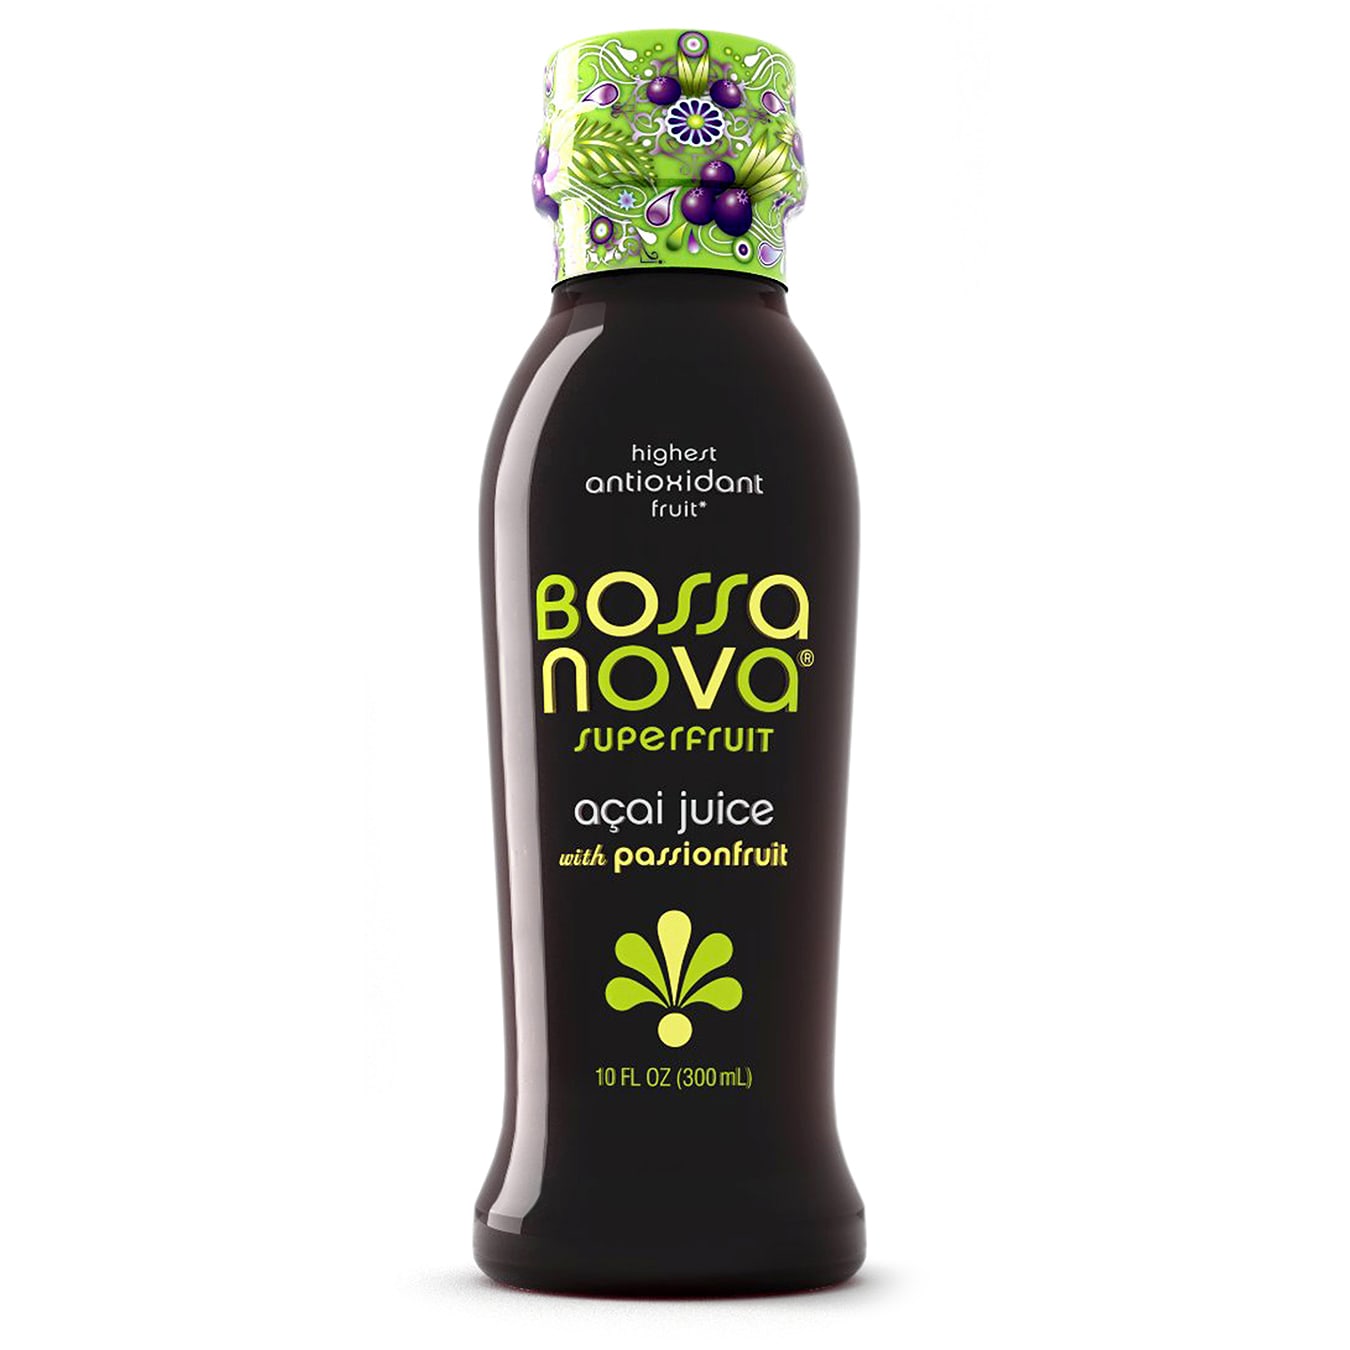 Bossa Nova Açai Passionfruit juice bottle packaging design